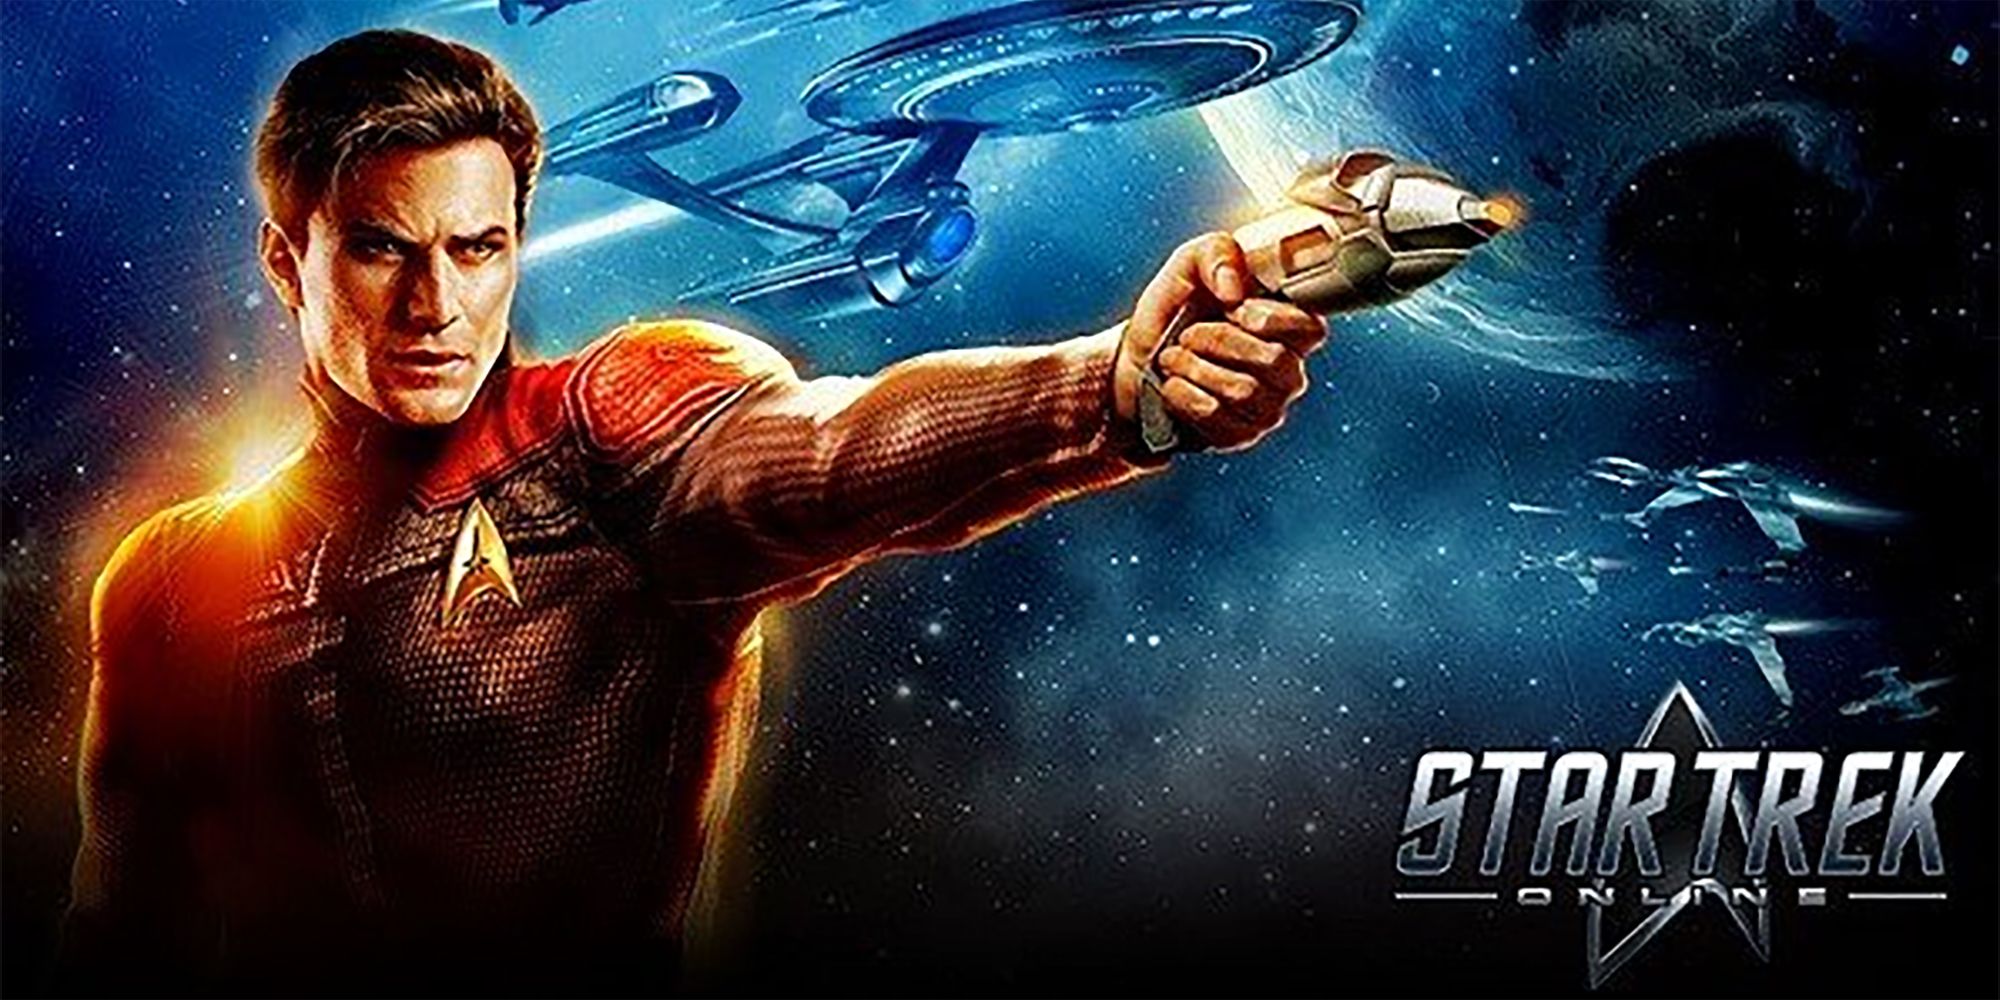 Star Trek Online's classic cover image